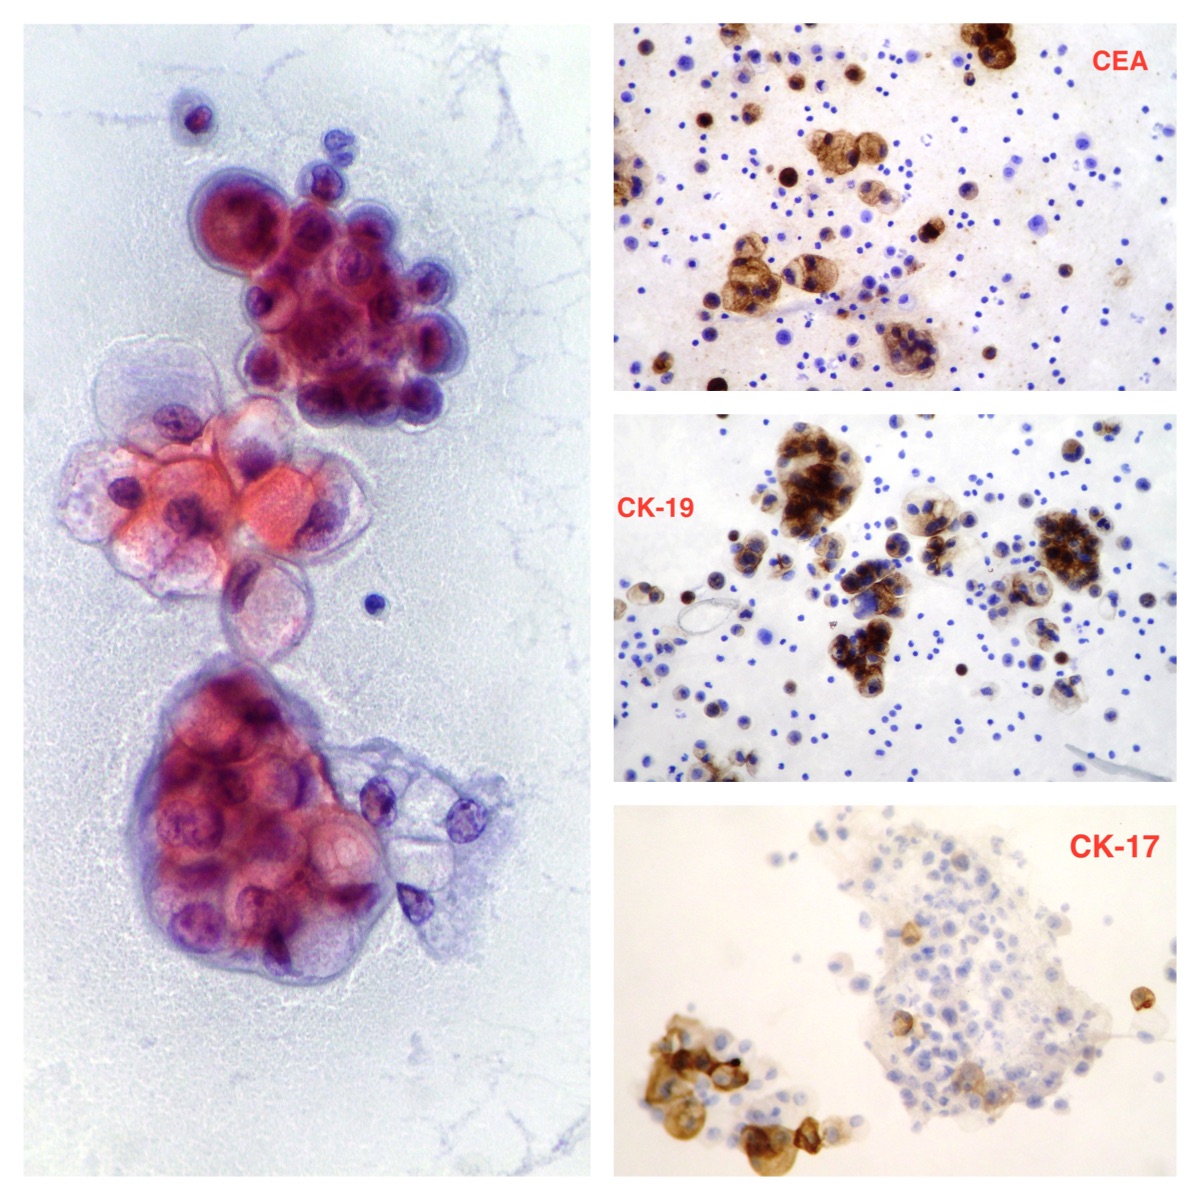 pancreatic cells, abdominal effusion CEA, CK-19, CK-17